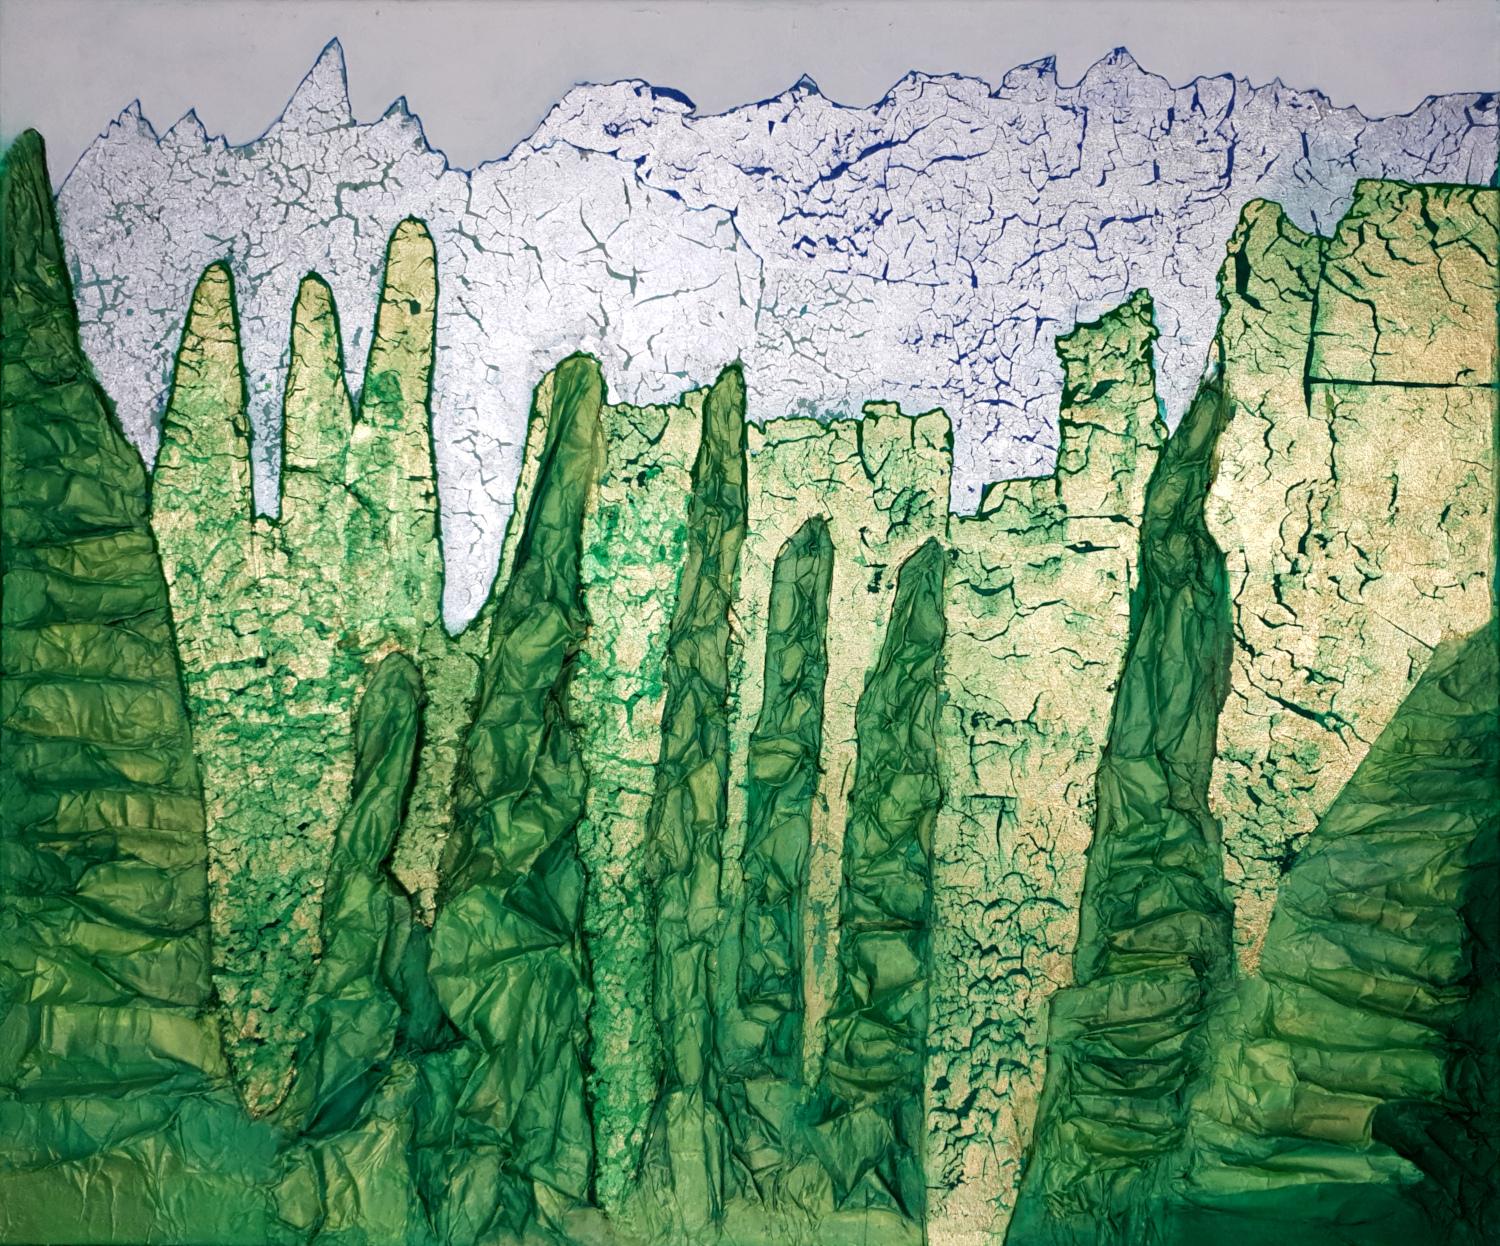 Zeitgenössische belgische Kunst von Corine Lescope – Canyon de Chine